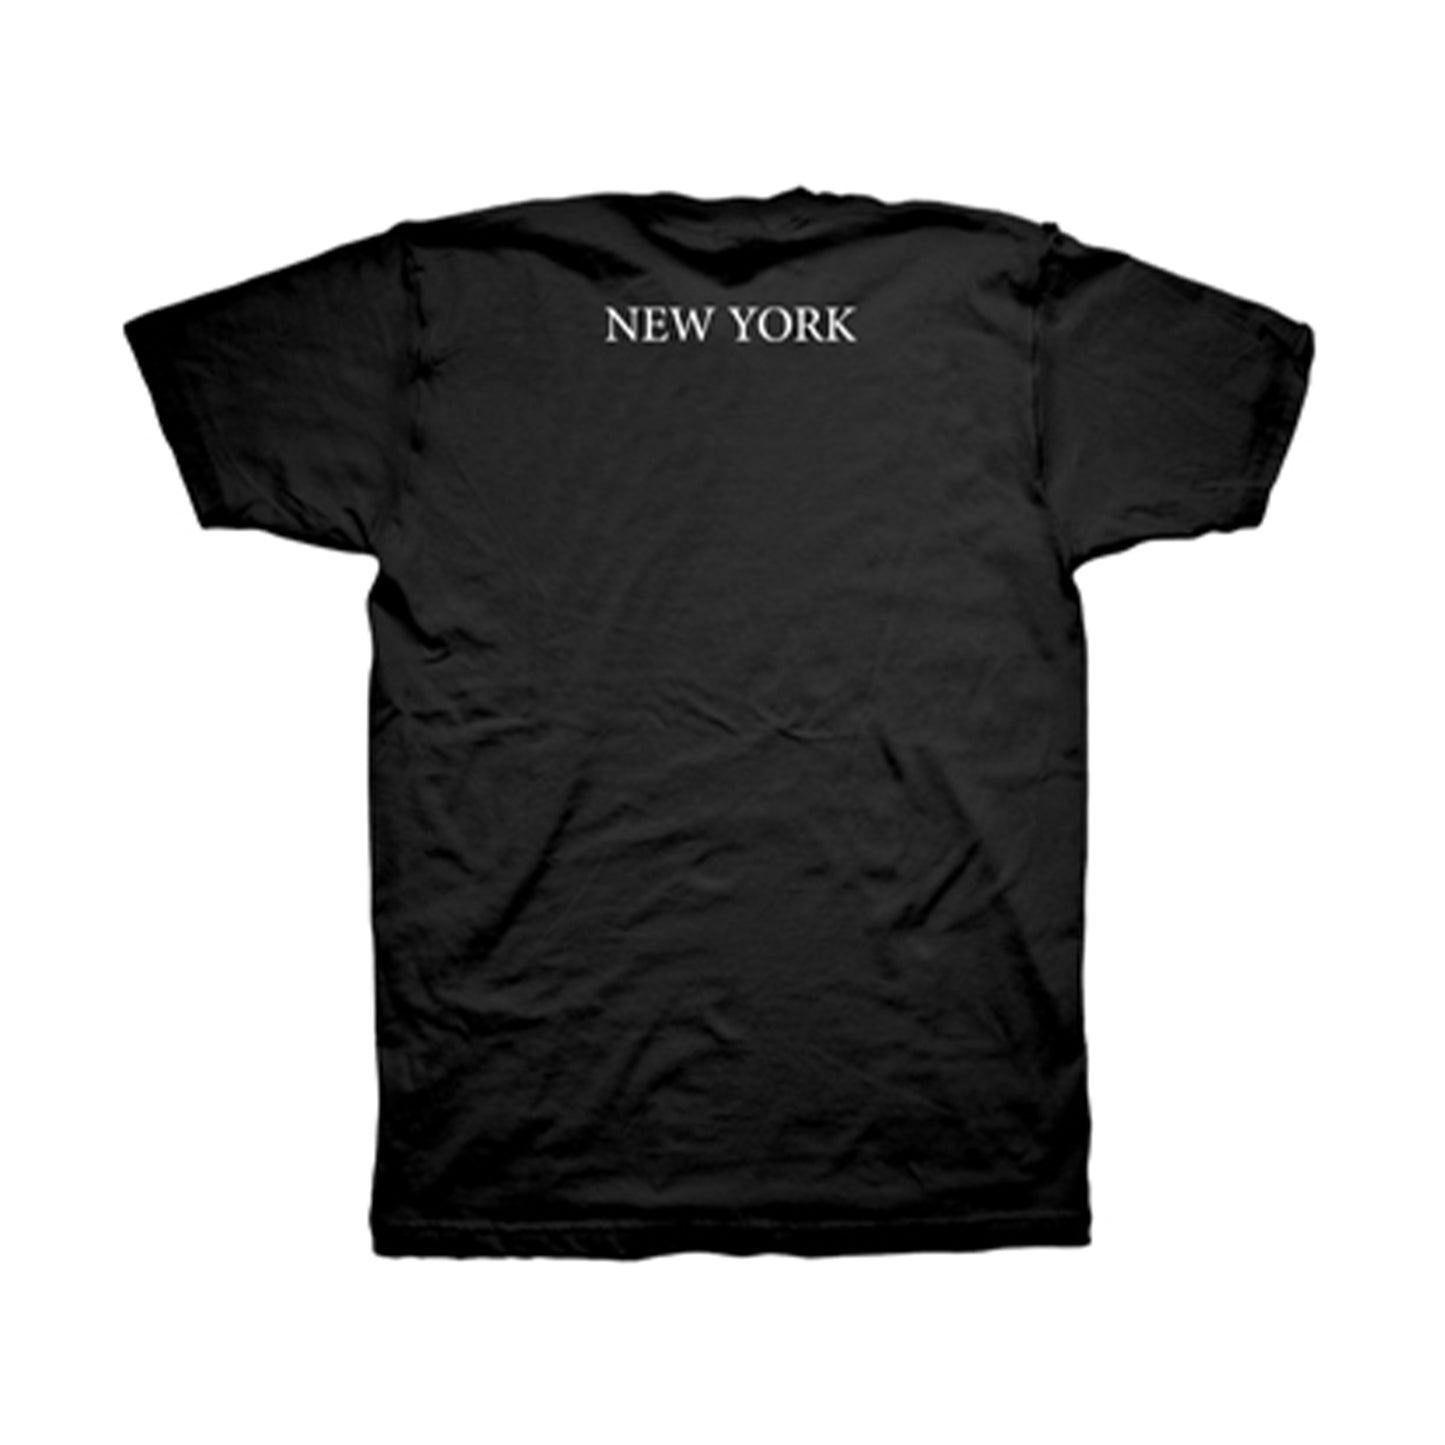 CATS Unisex Logo T-shirt - New York